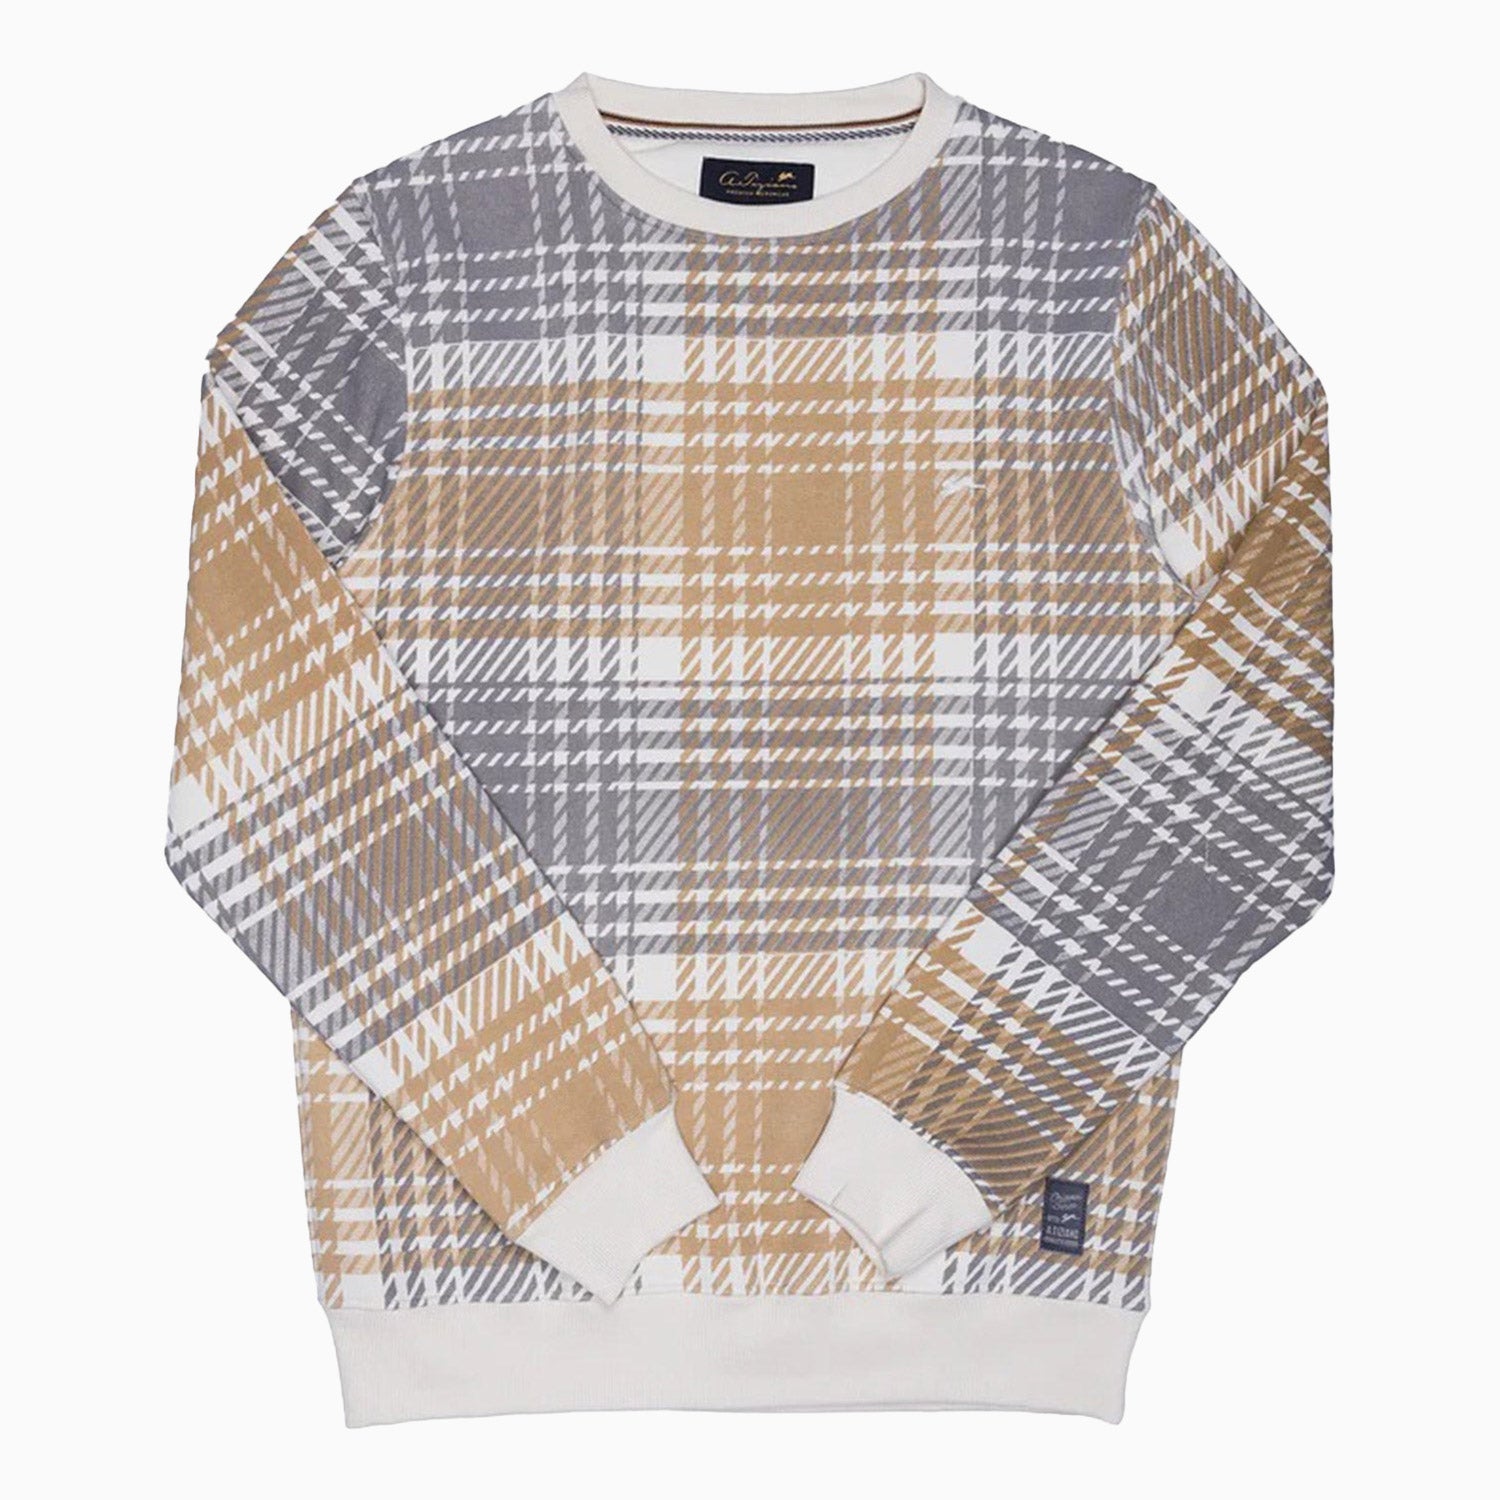 a-tiziano-mens-brady-graphic-print-knit-sweatshirt-24atc4004